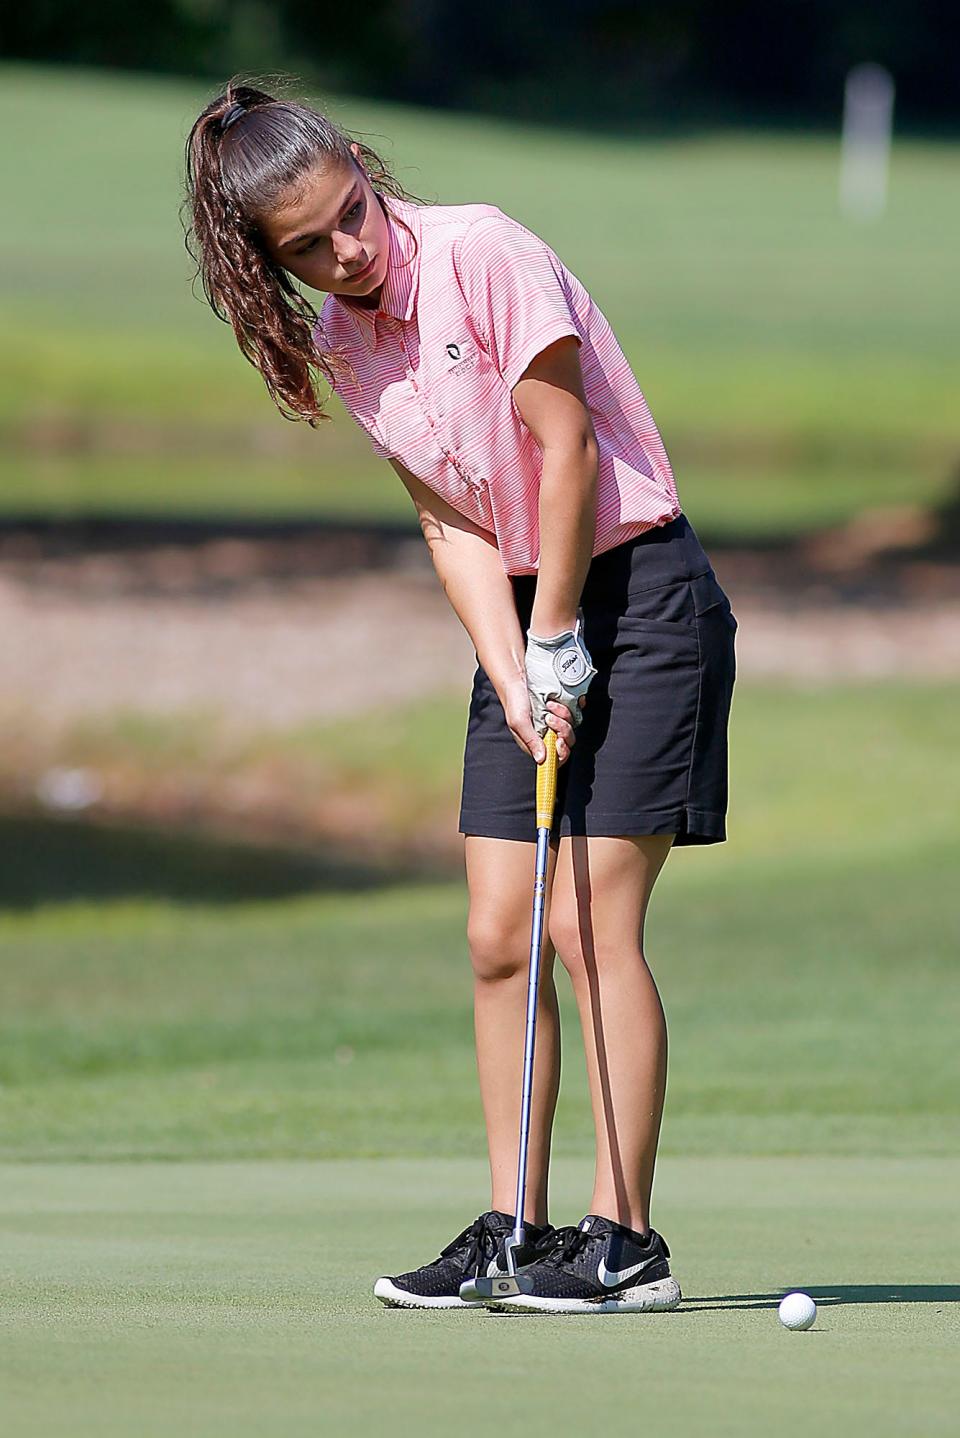 Elleni Miller putts during the first round of the Times-Gazette Junior golf championships at Brookside Gold Course on Wednesday, July 20, 2022. TOM E. PUSKAR/ASHLAND TIMES-GAZETTE